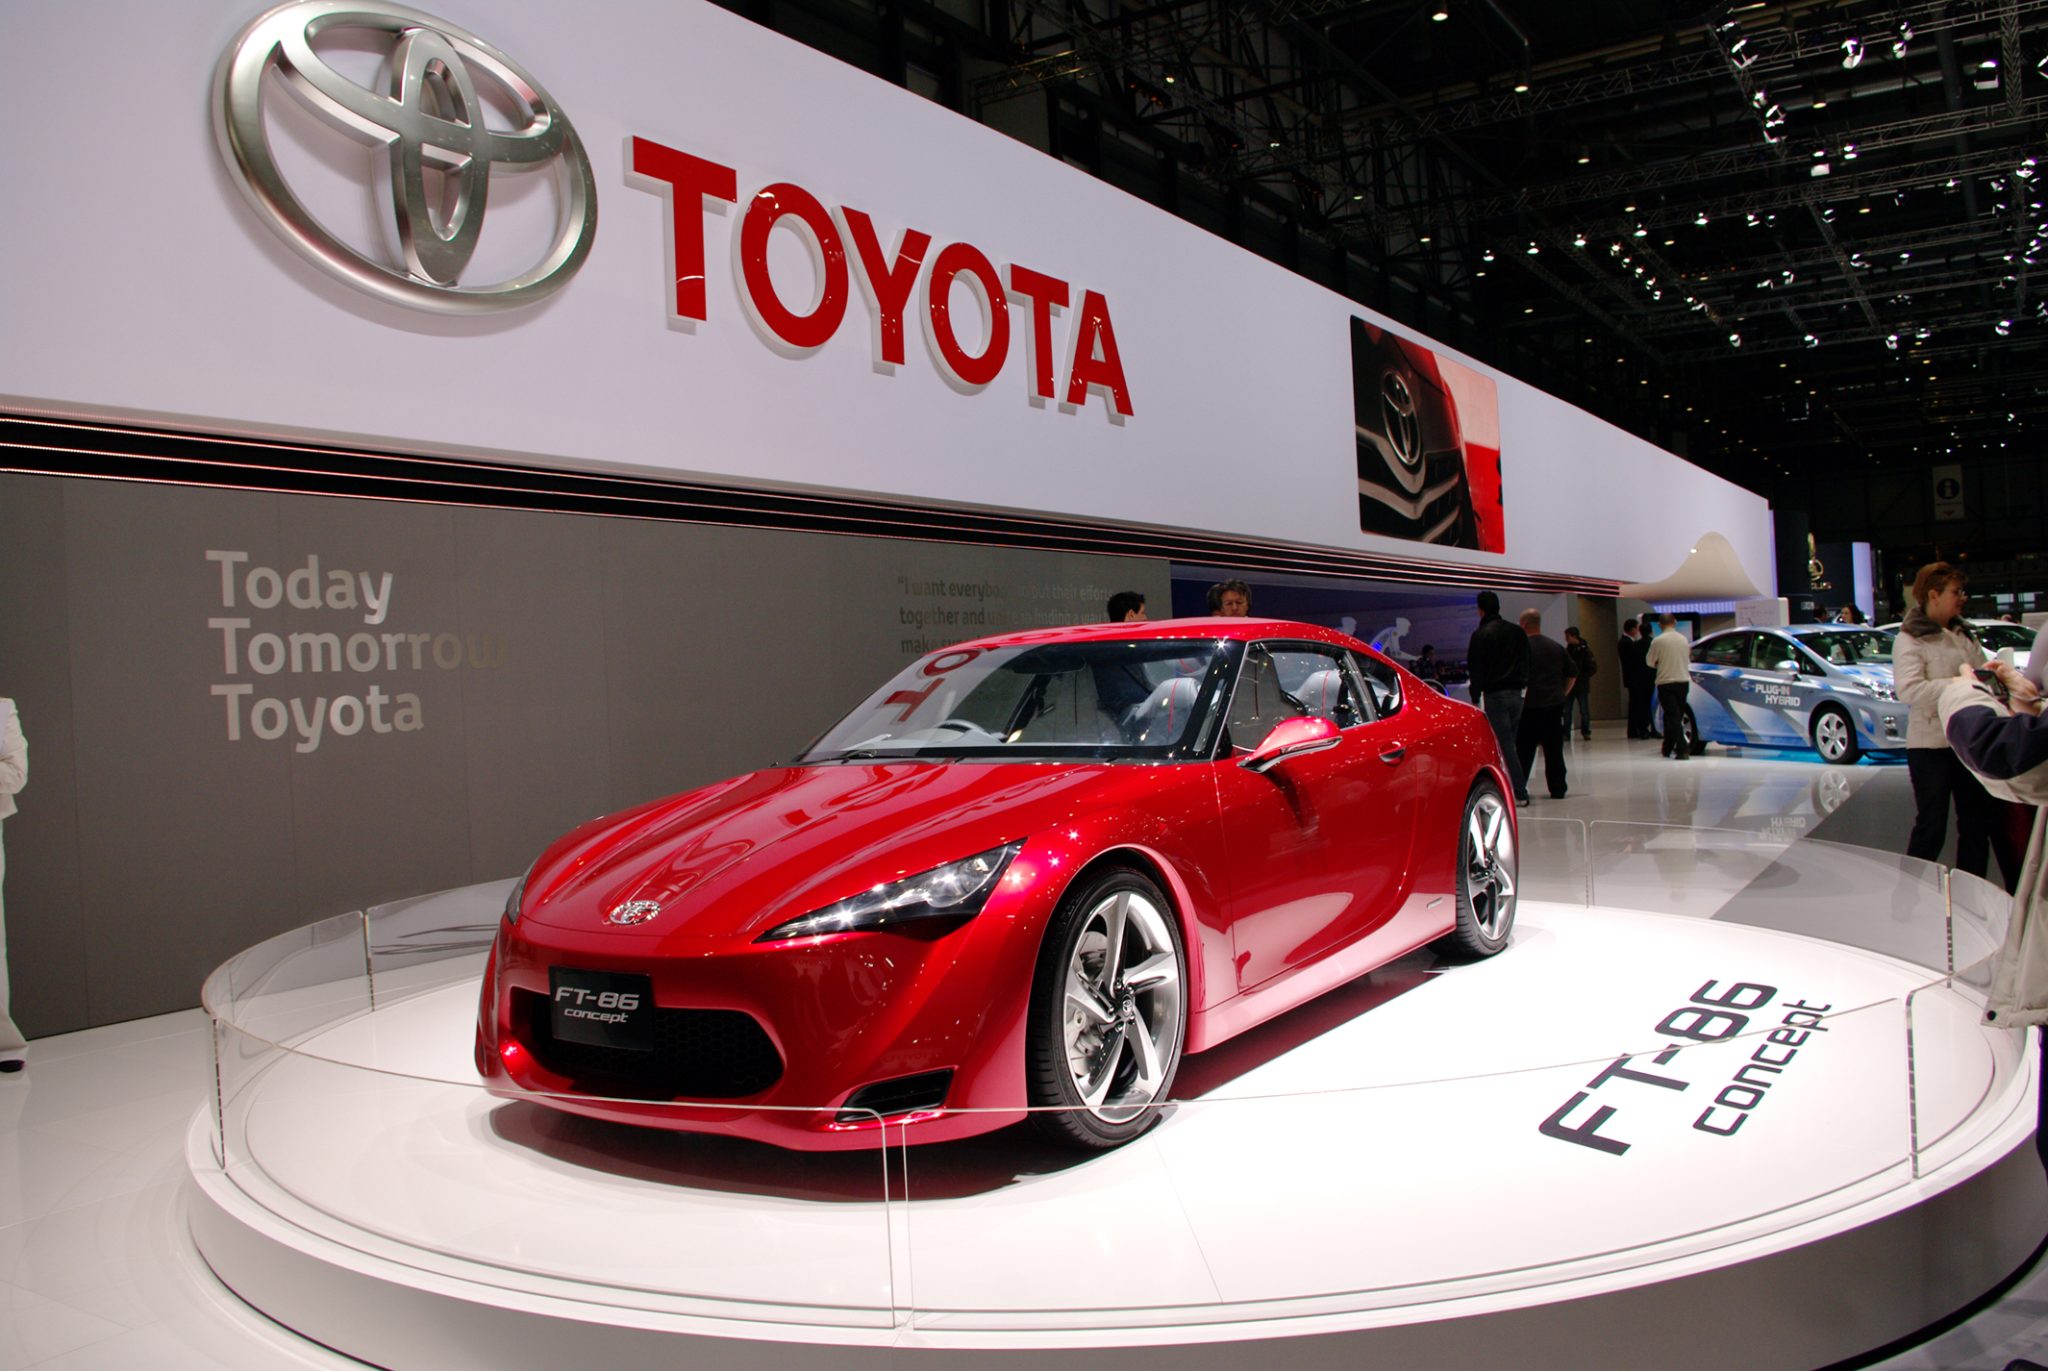 "Toyota Motor" Yaponiya tarixində yeni rekorda imza atıb